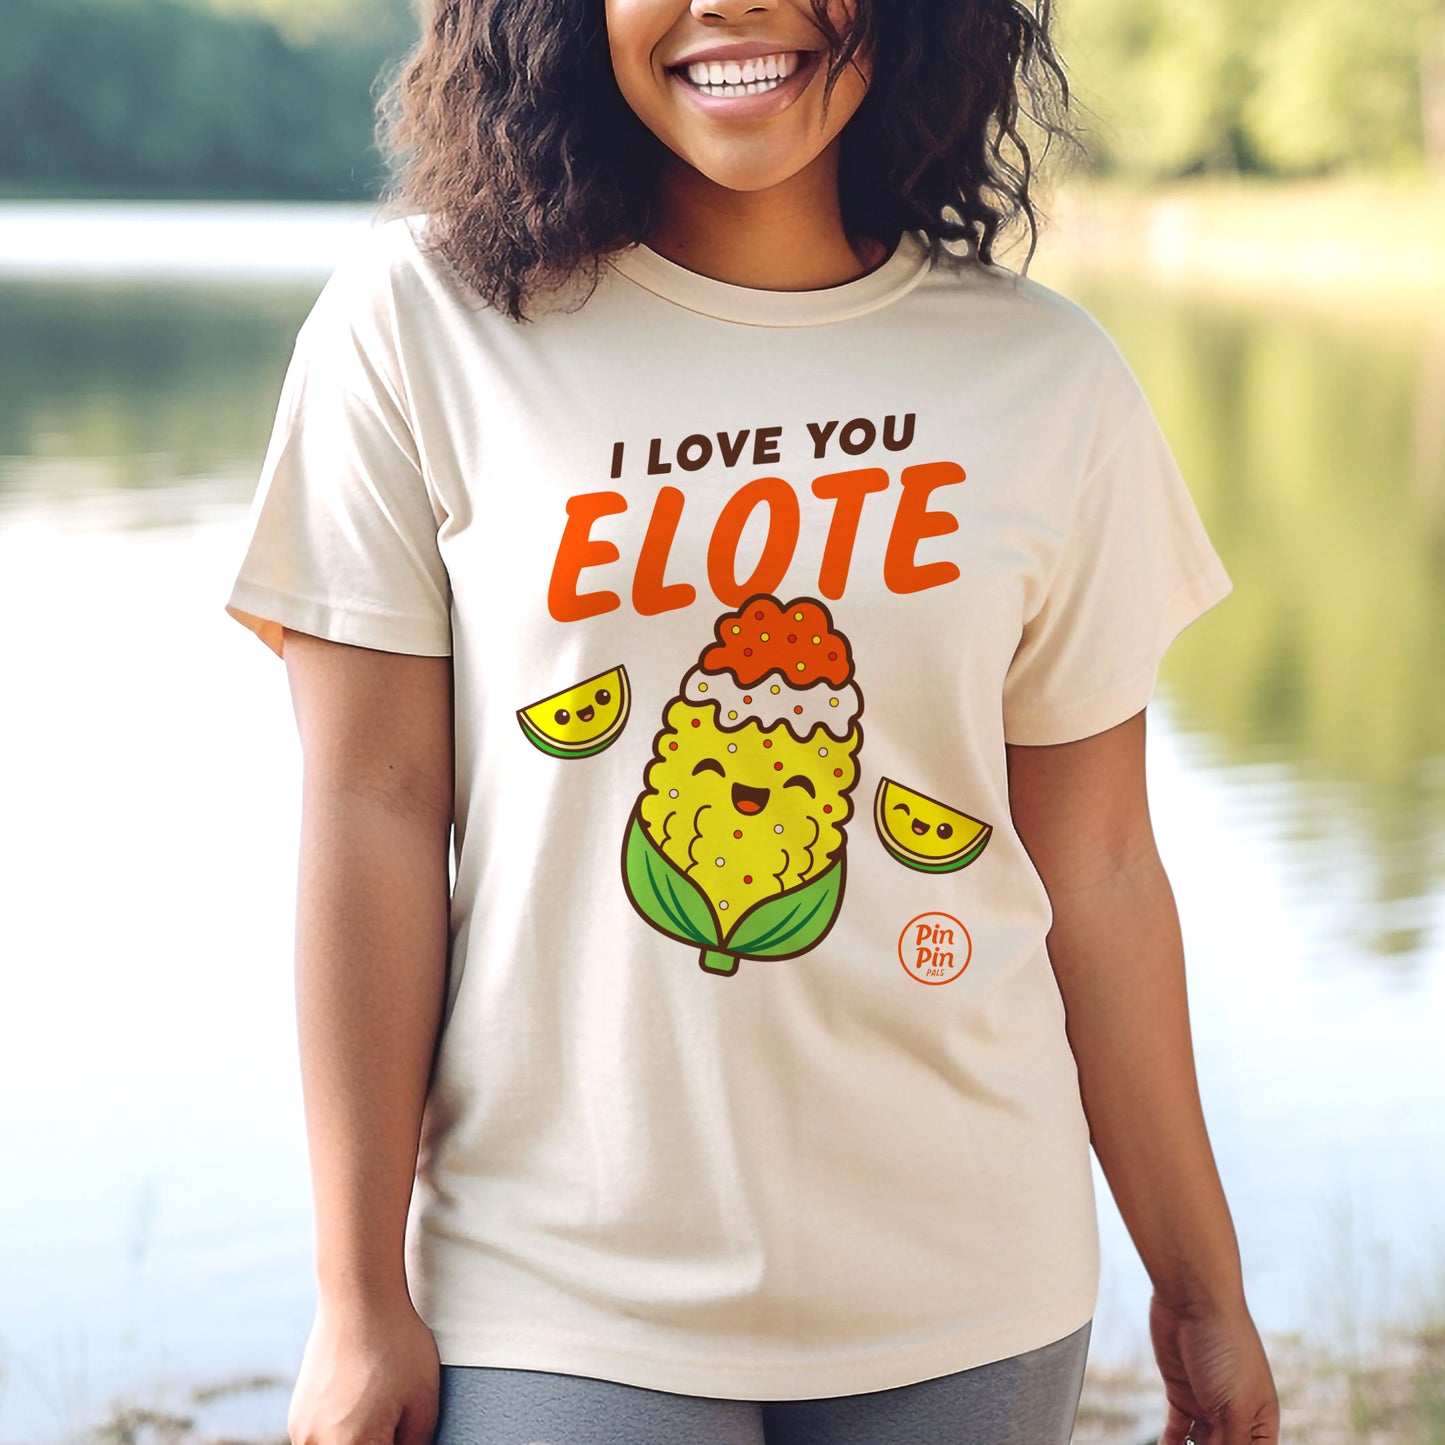 I Love You Elote - Adult Unisex T-Shirt